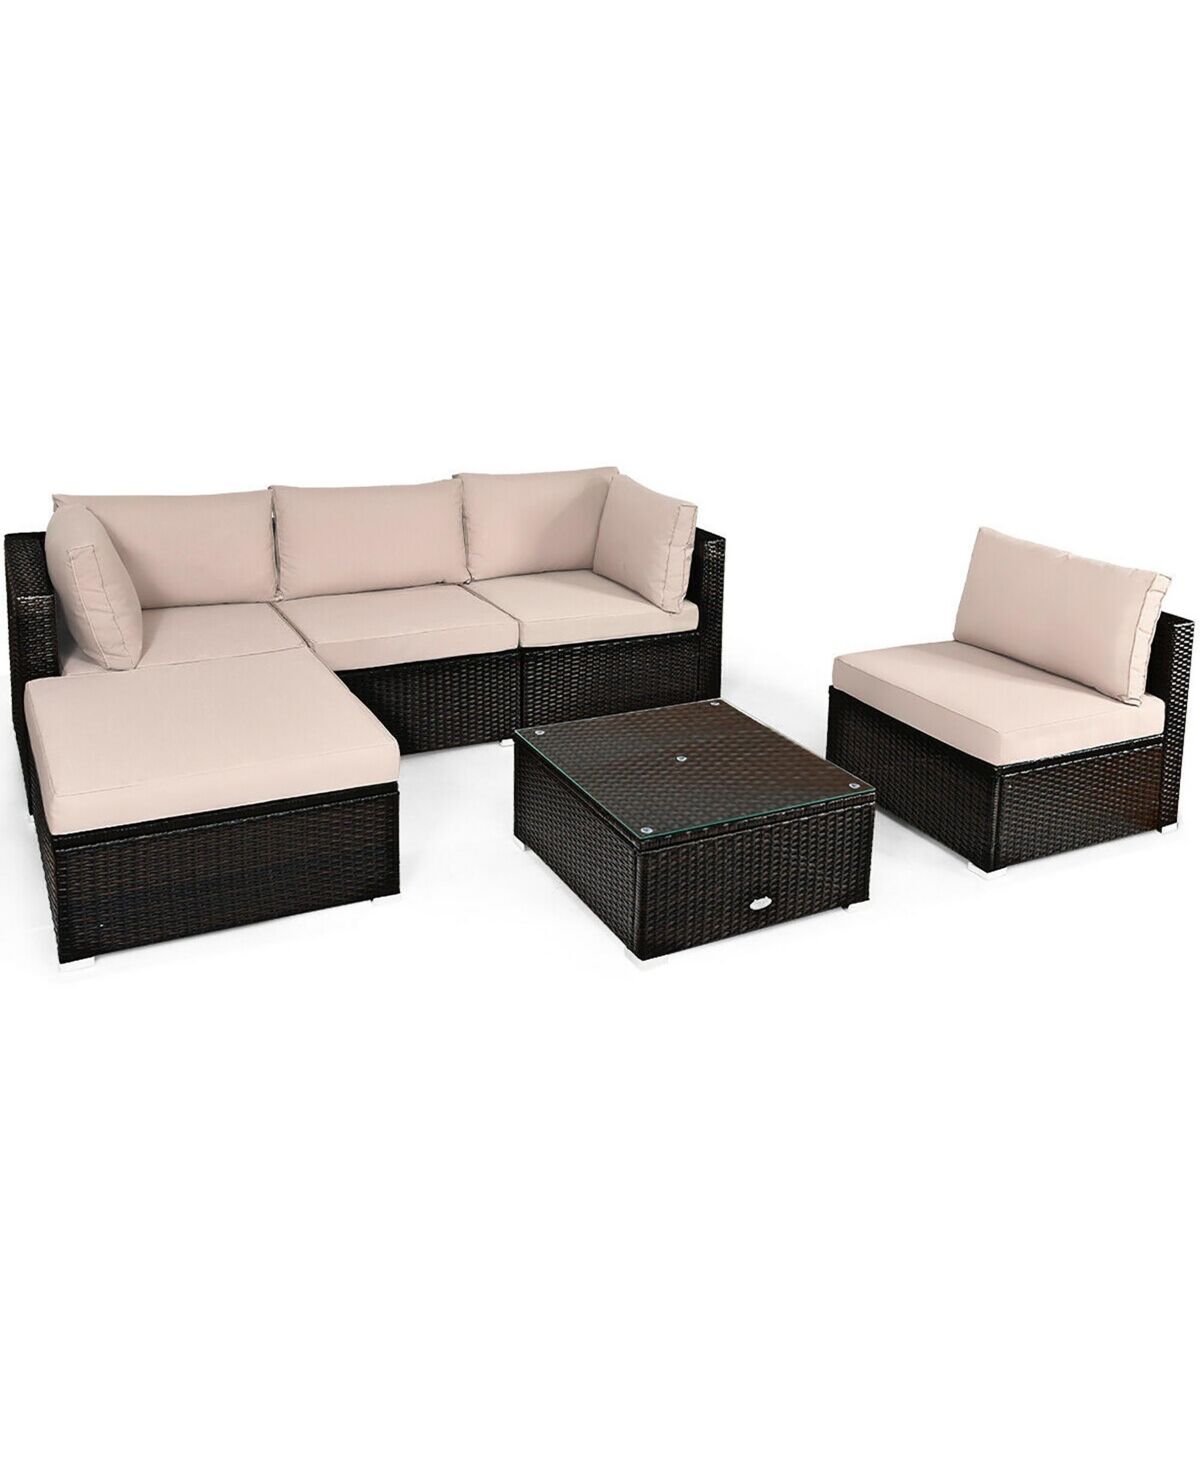 Costway 6PCS Outdoor Patio Rattan Furniture Set Cushioned Sectional Sofa - Beige Khaki